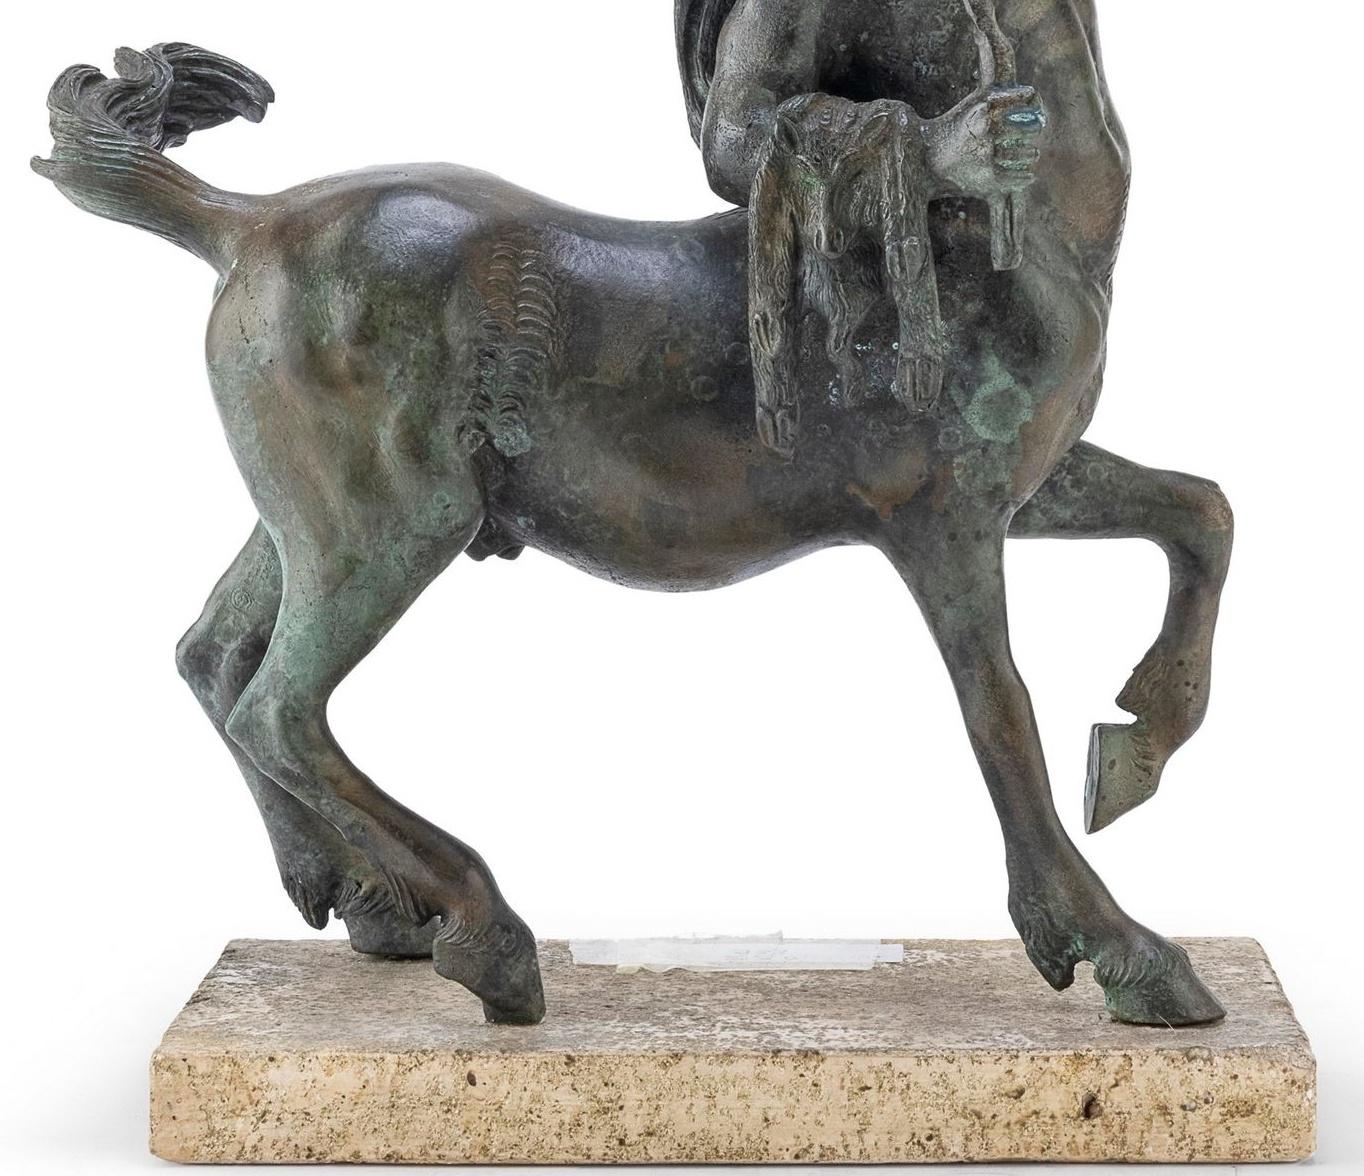 Bronze of the centaur chirone in bronze

Sculpture of the centaur chirone in bronze, 
19th century
with green patina. Rectangular travertine base.
Measurements cm. 52 x 32 x 16.
Very good condition.